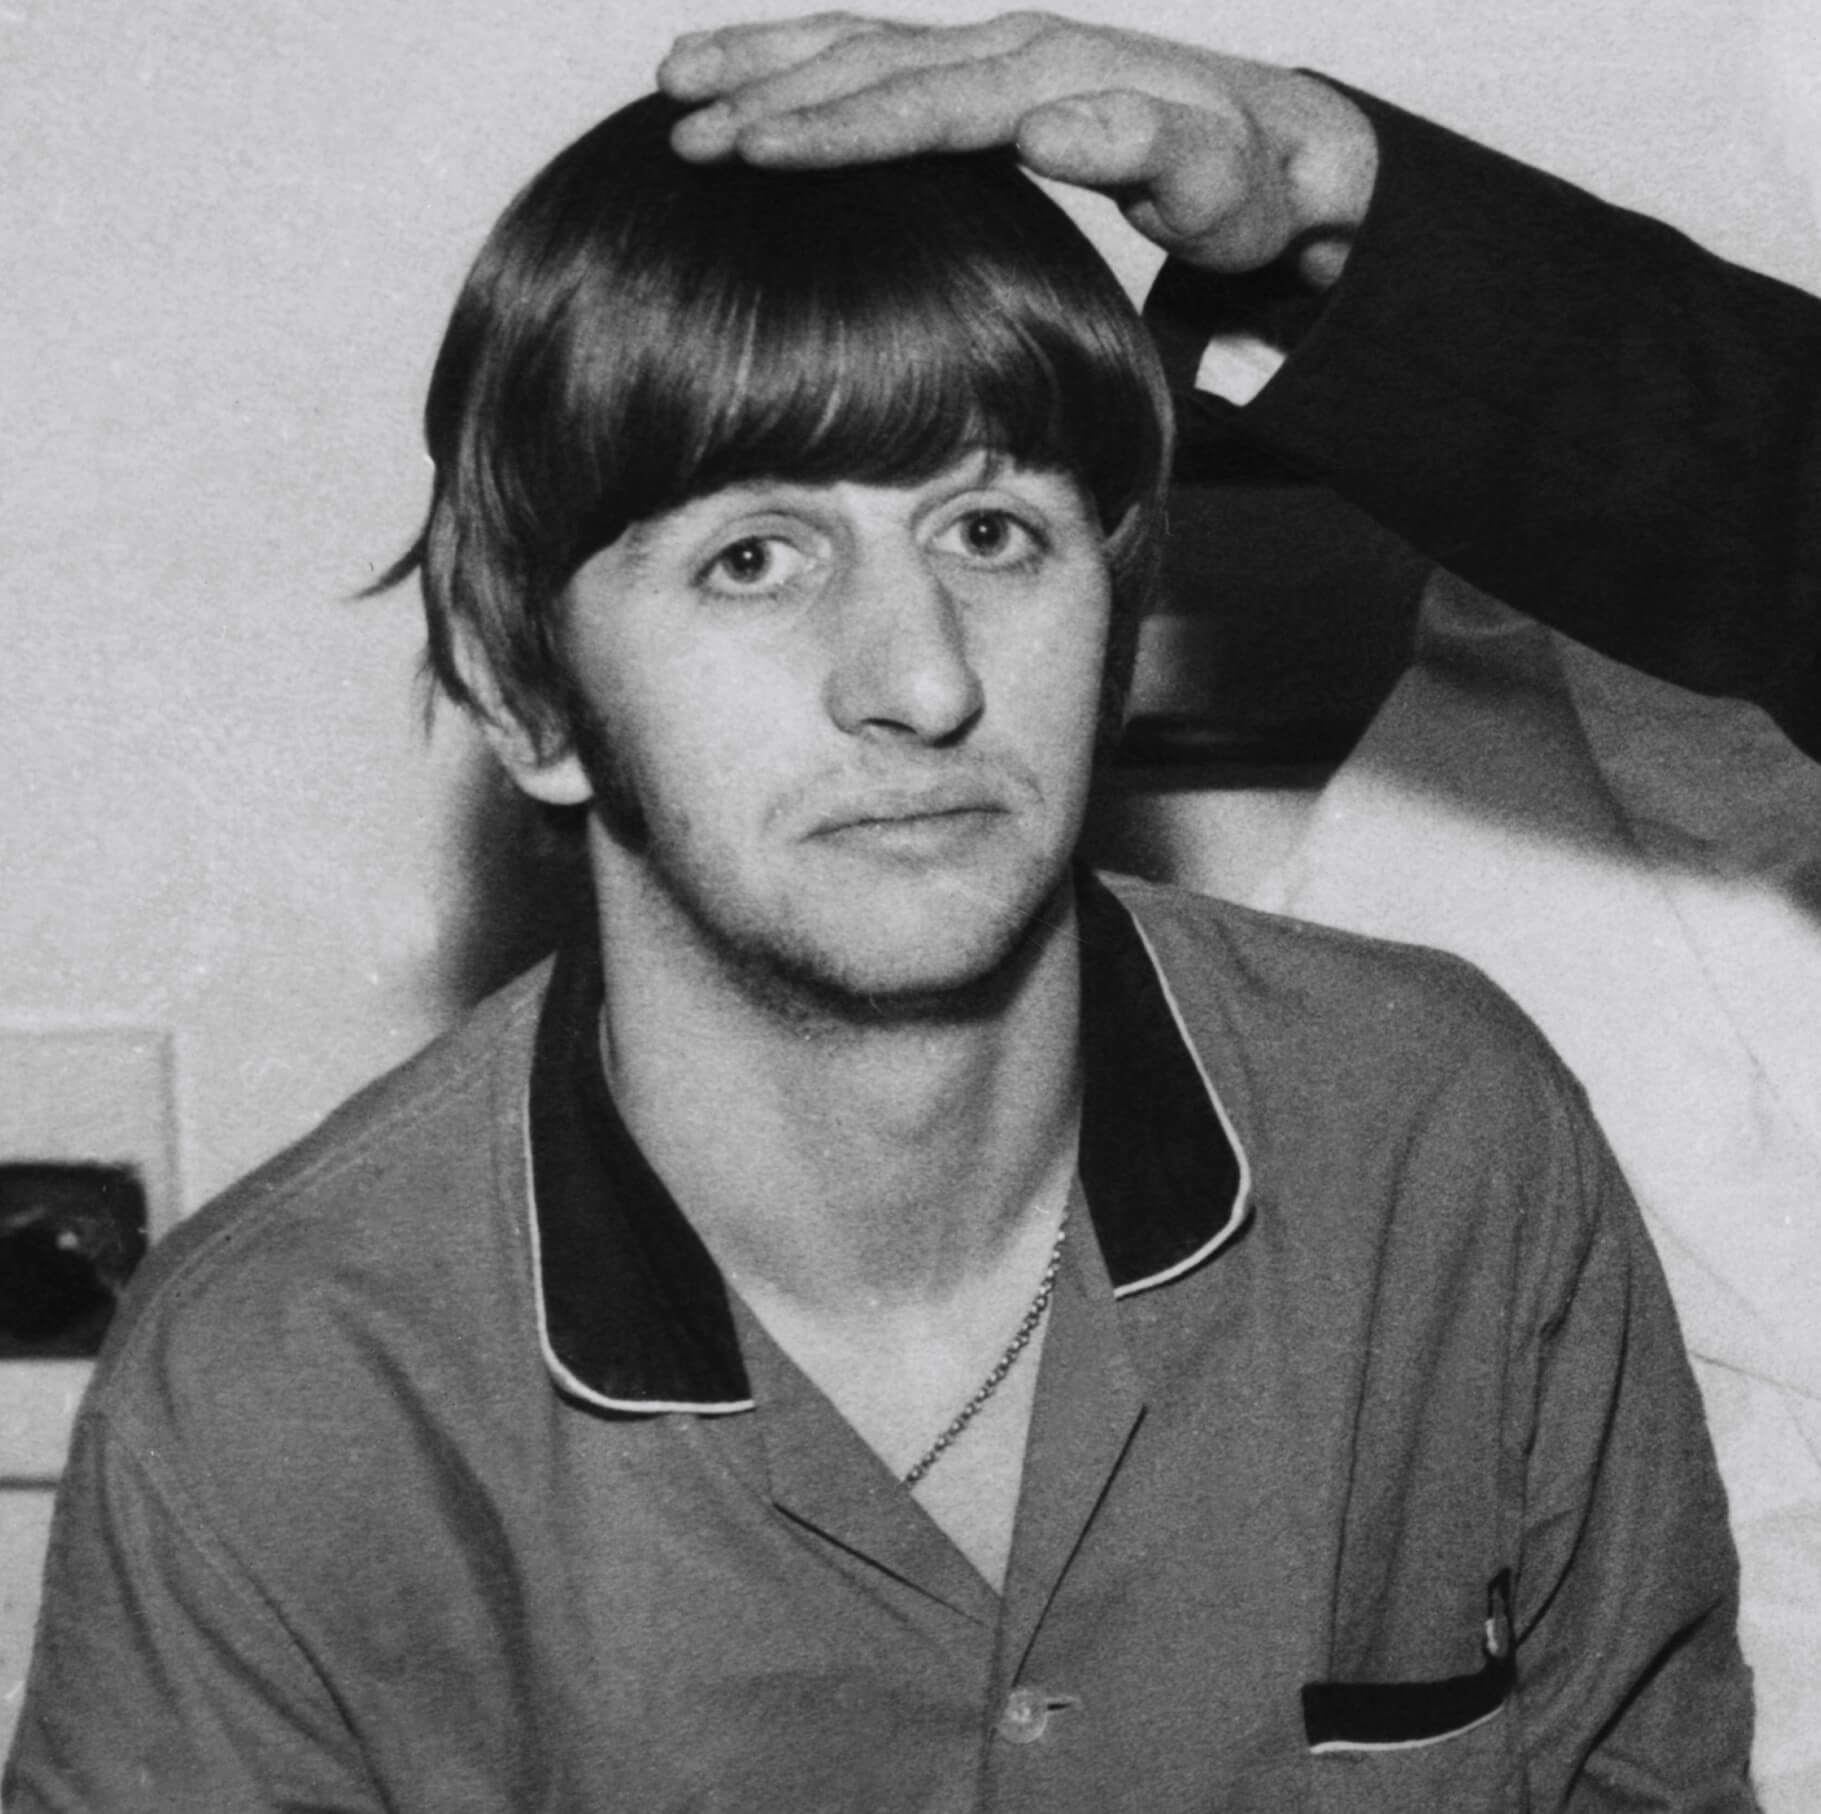 Someone touching Ringo Starr